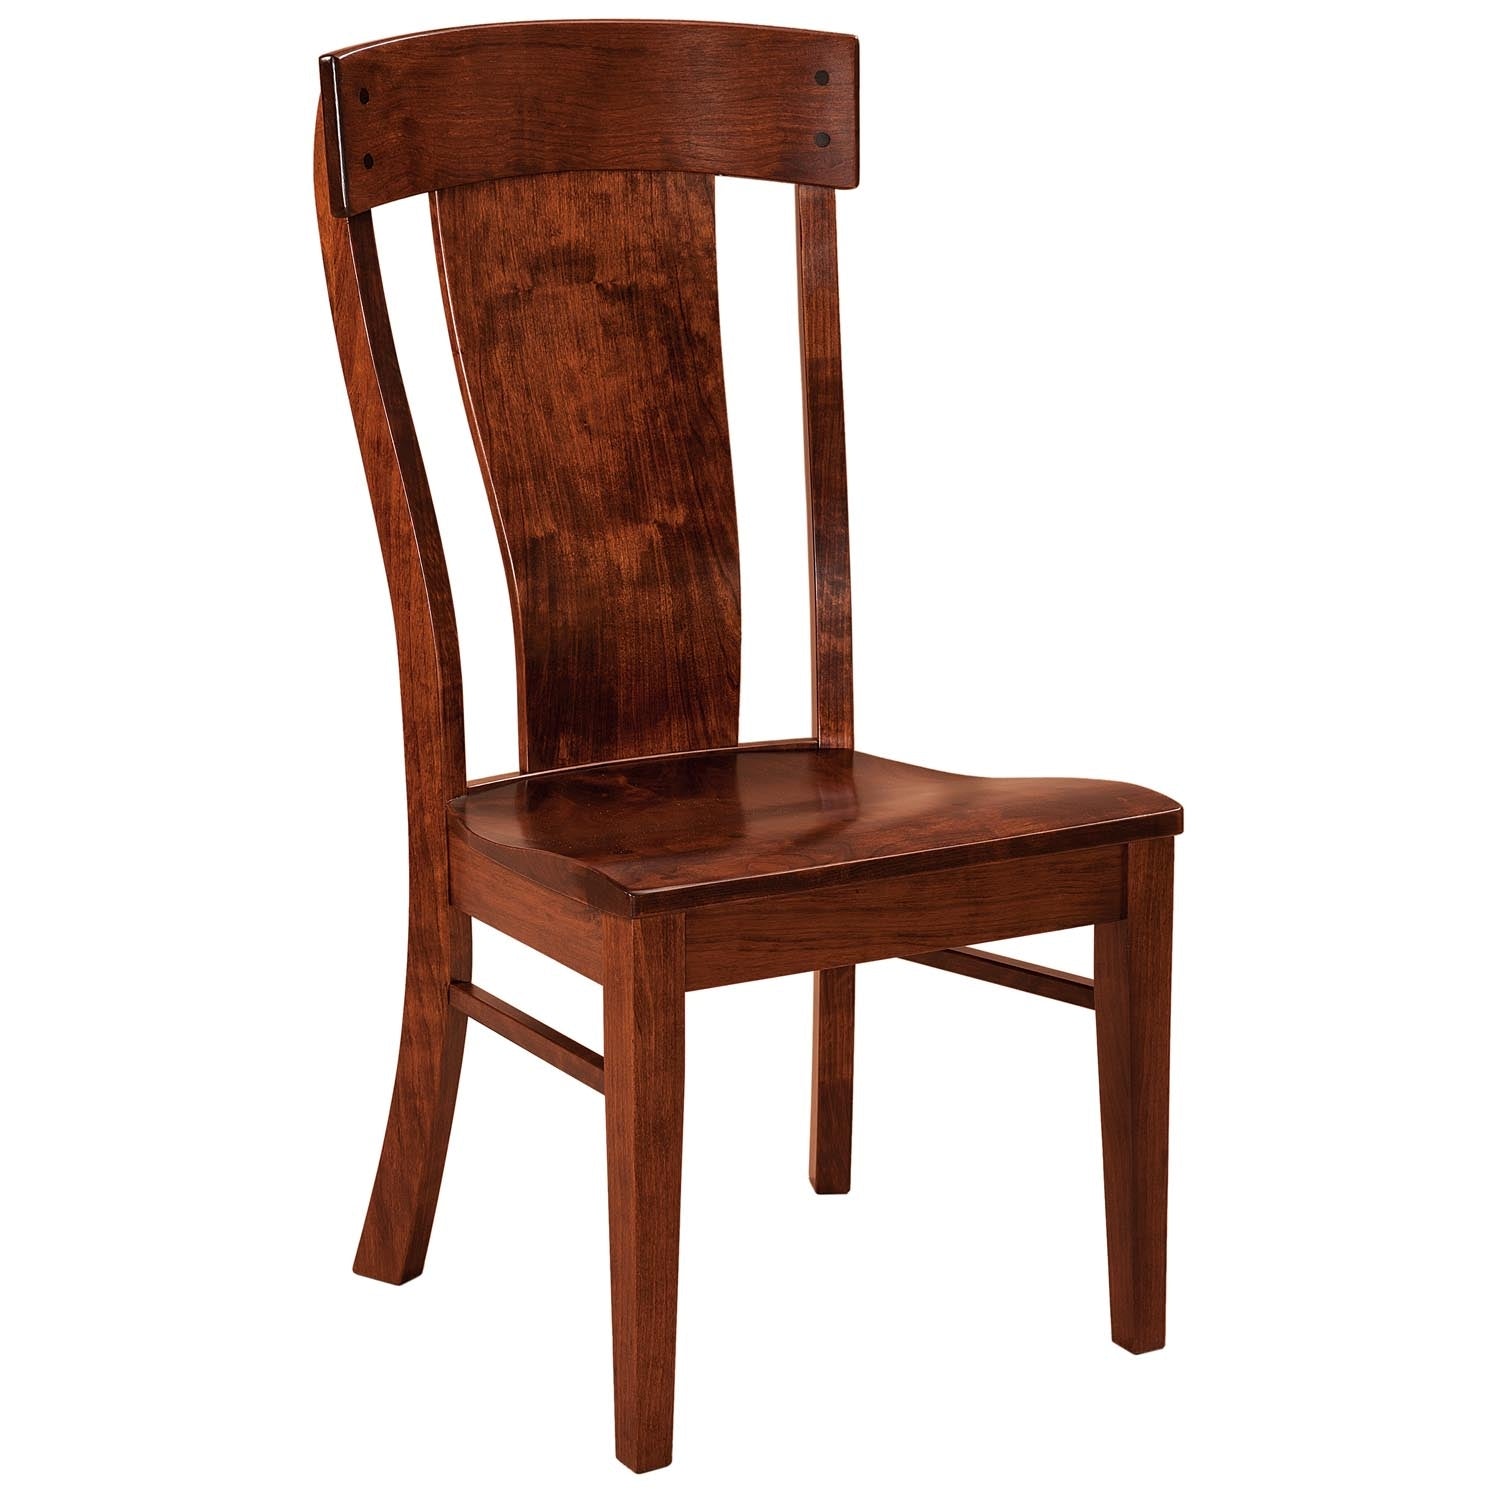 La Combe Chair - snyders.furniture